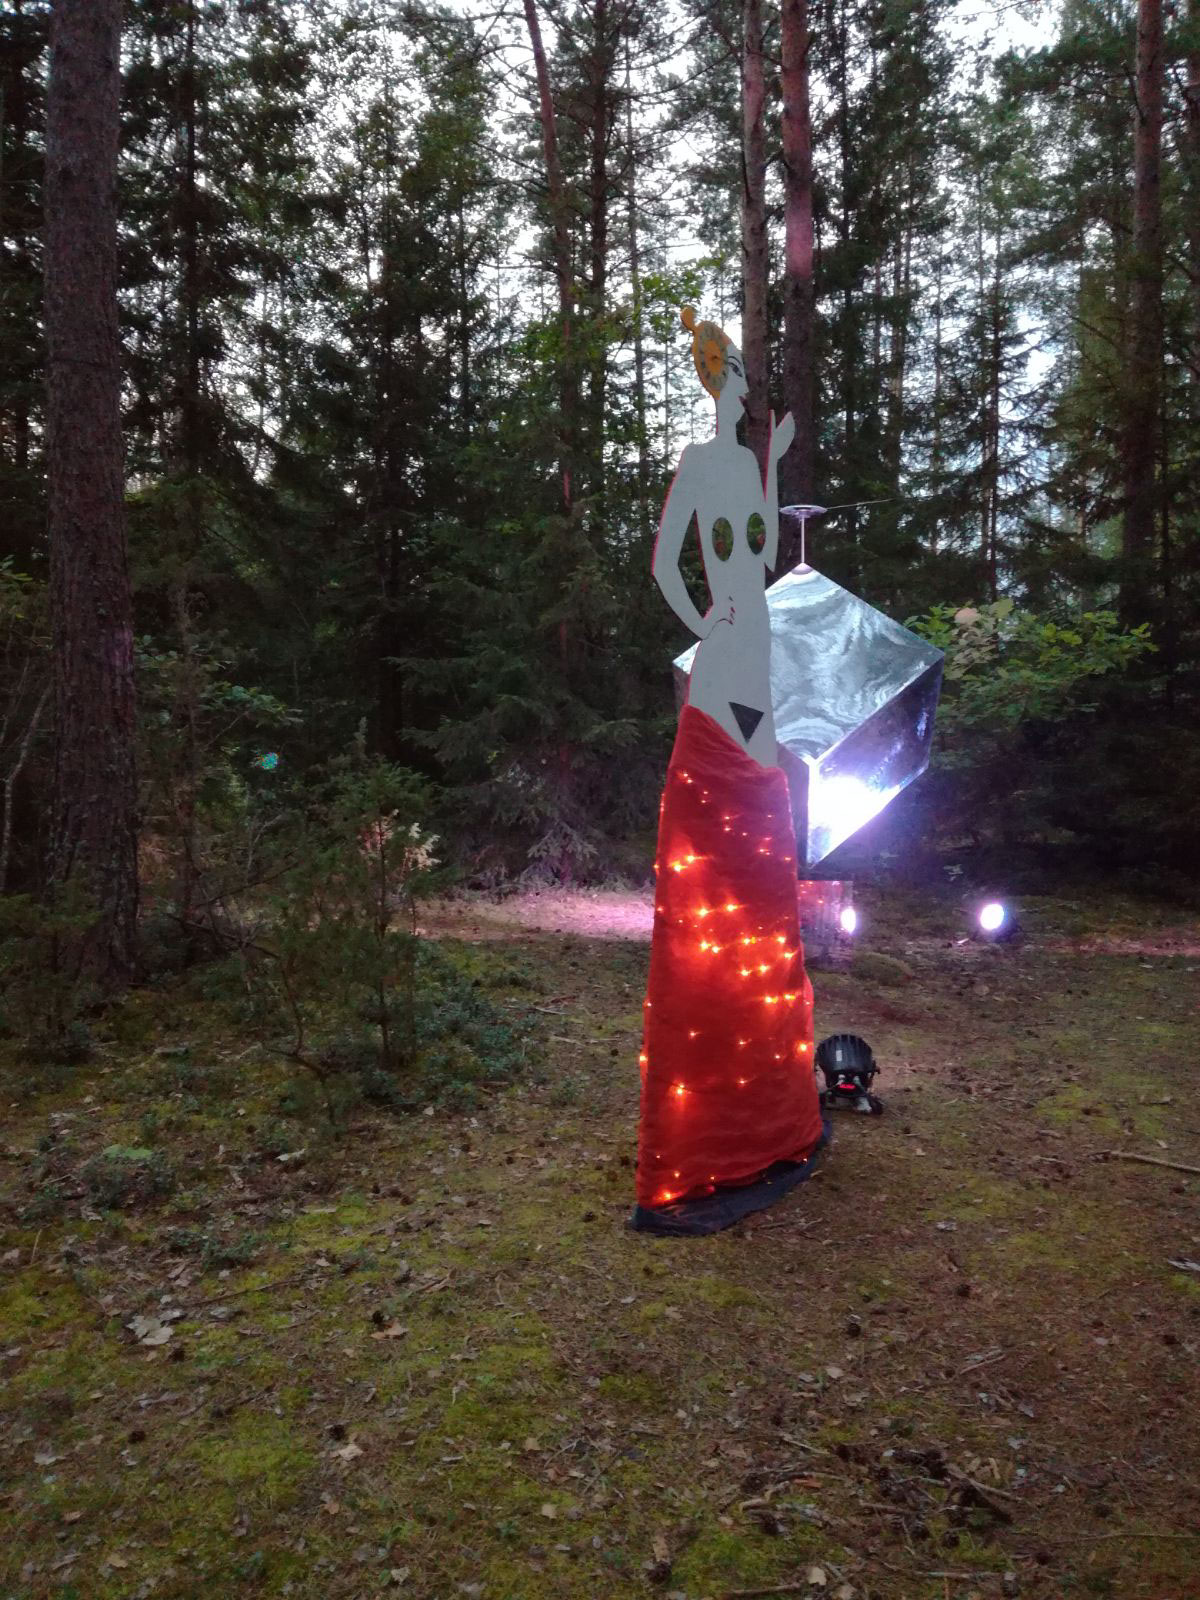 mirror cube installation figure woman kinetic art artist Yaga festival woods forest